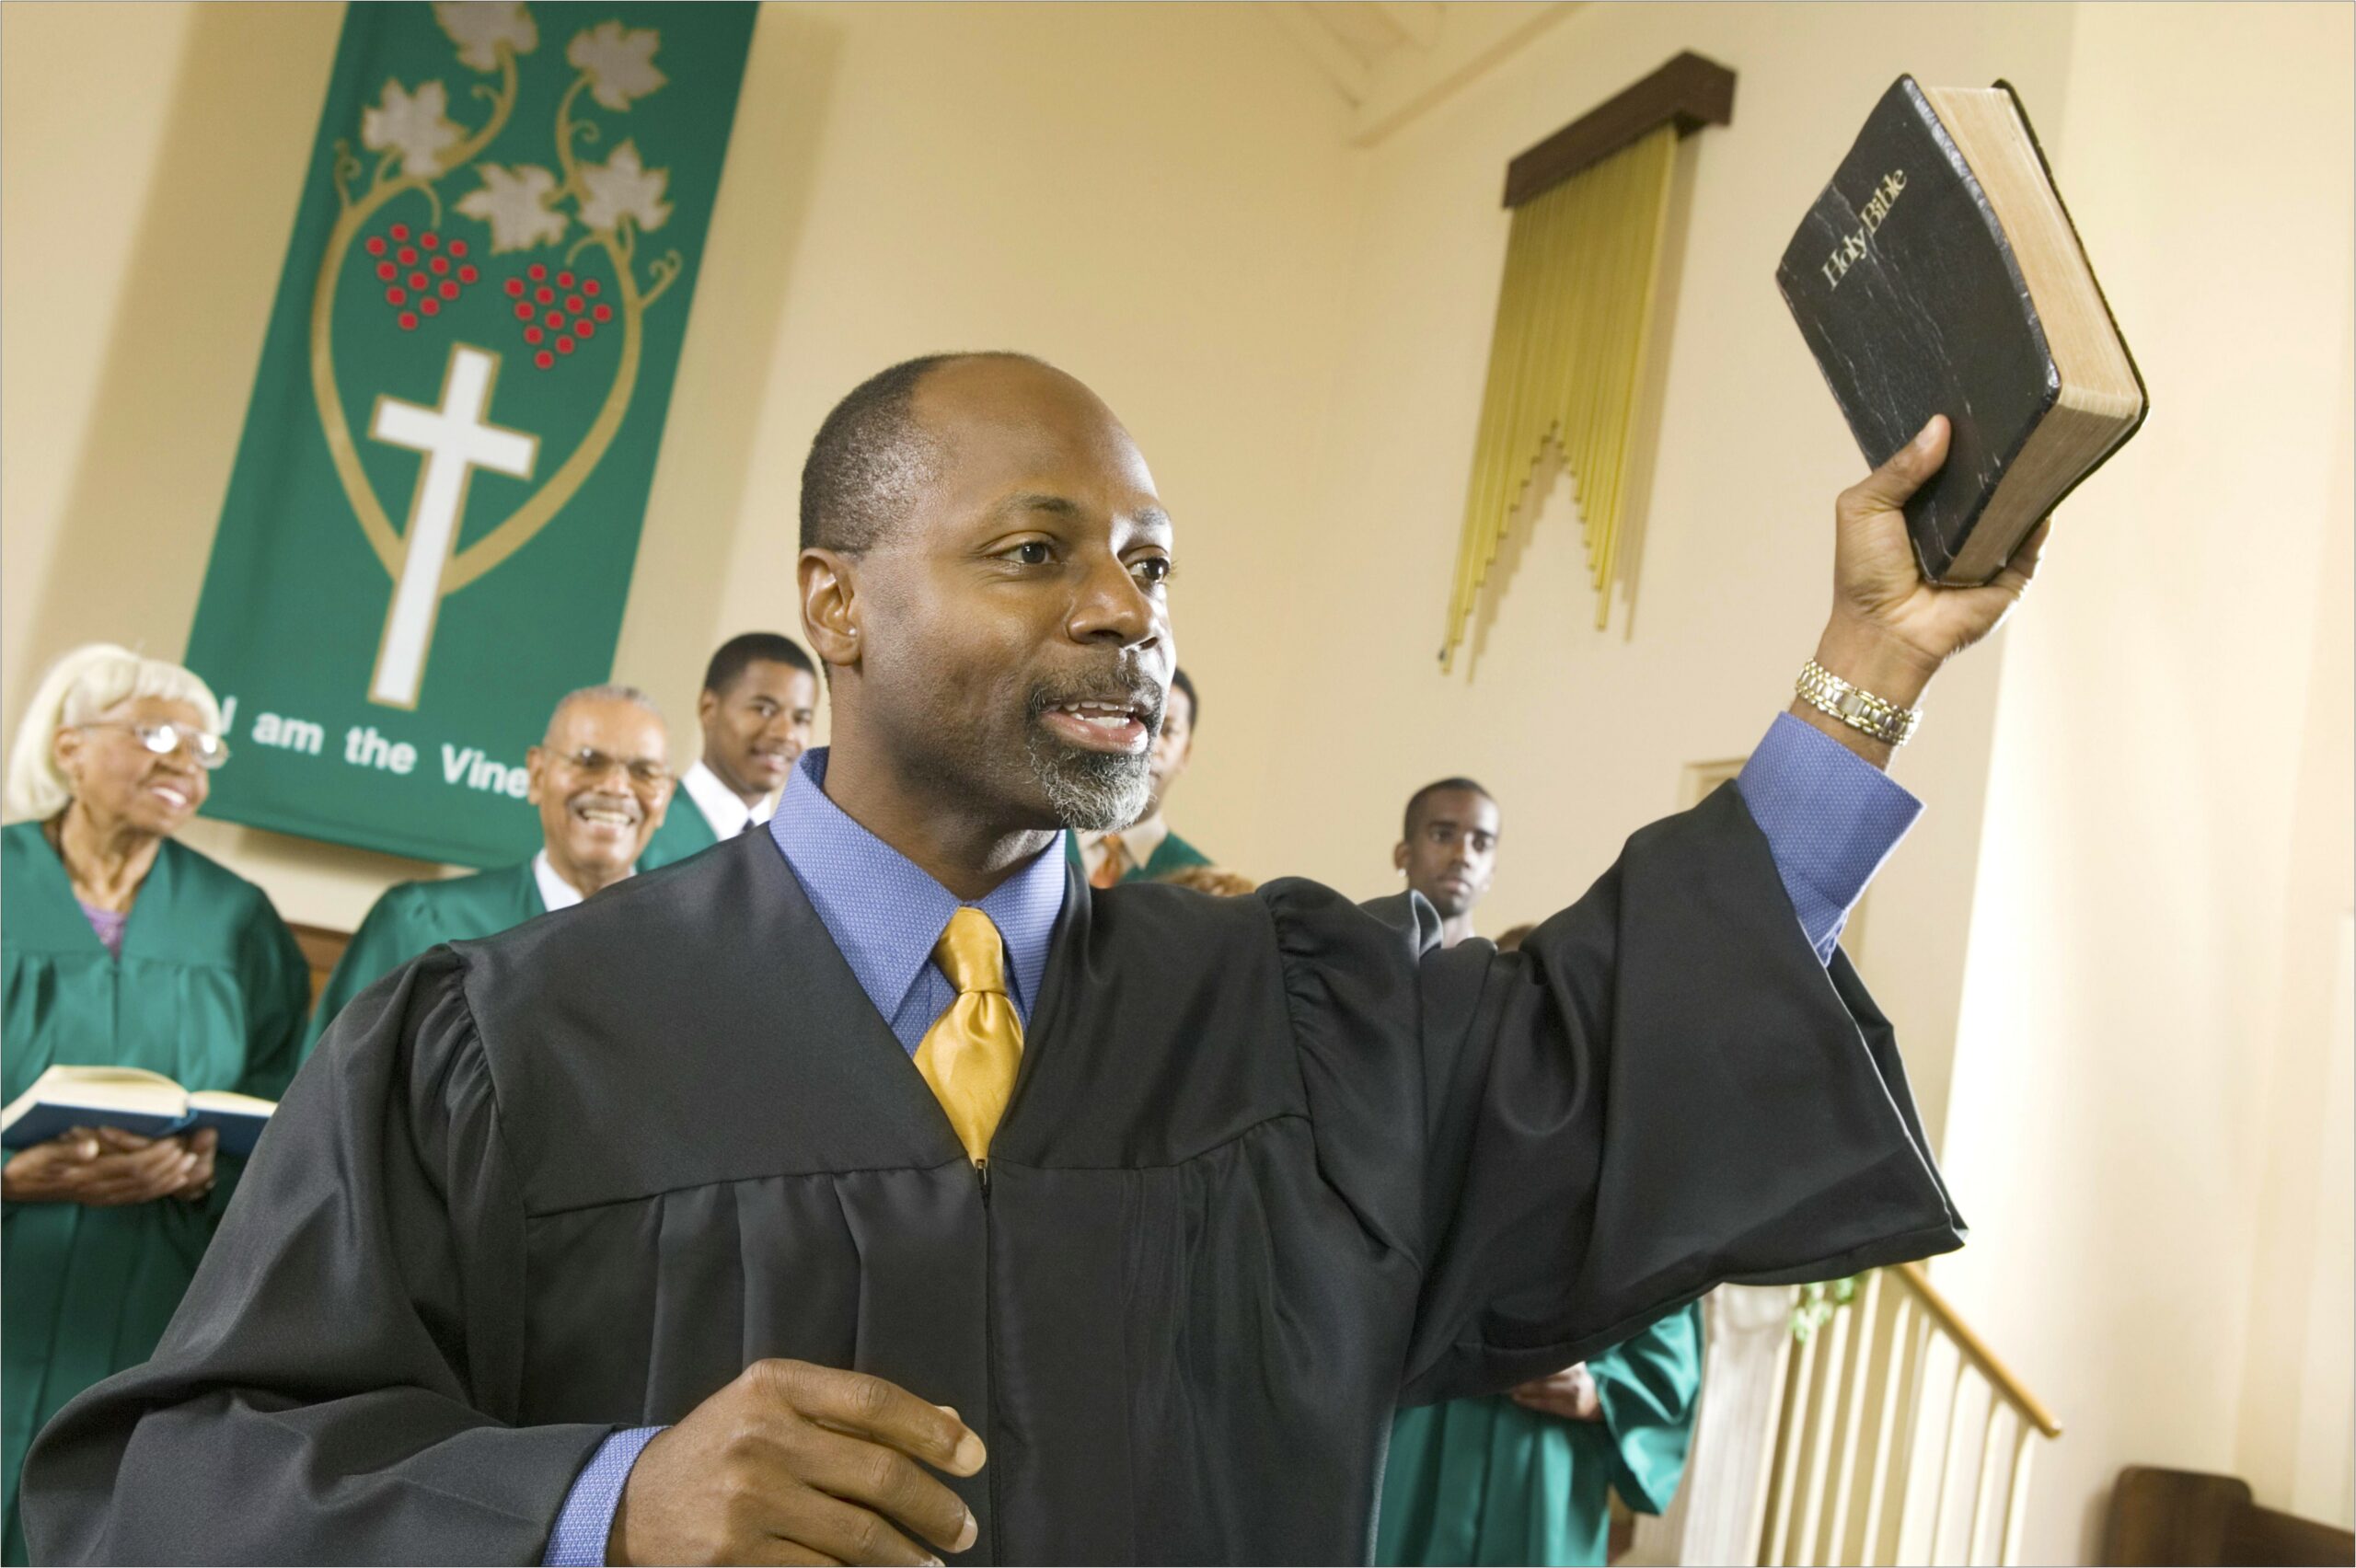 Resume For Pastor Transisioning To Secular Job